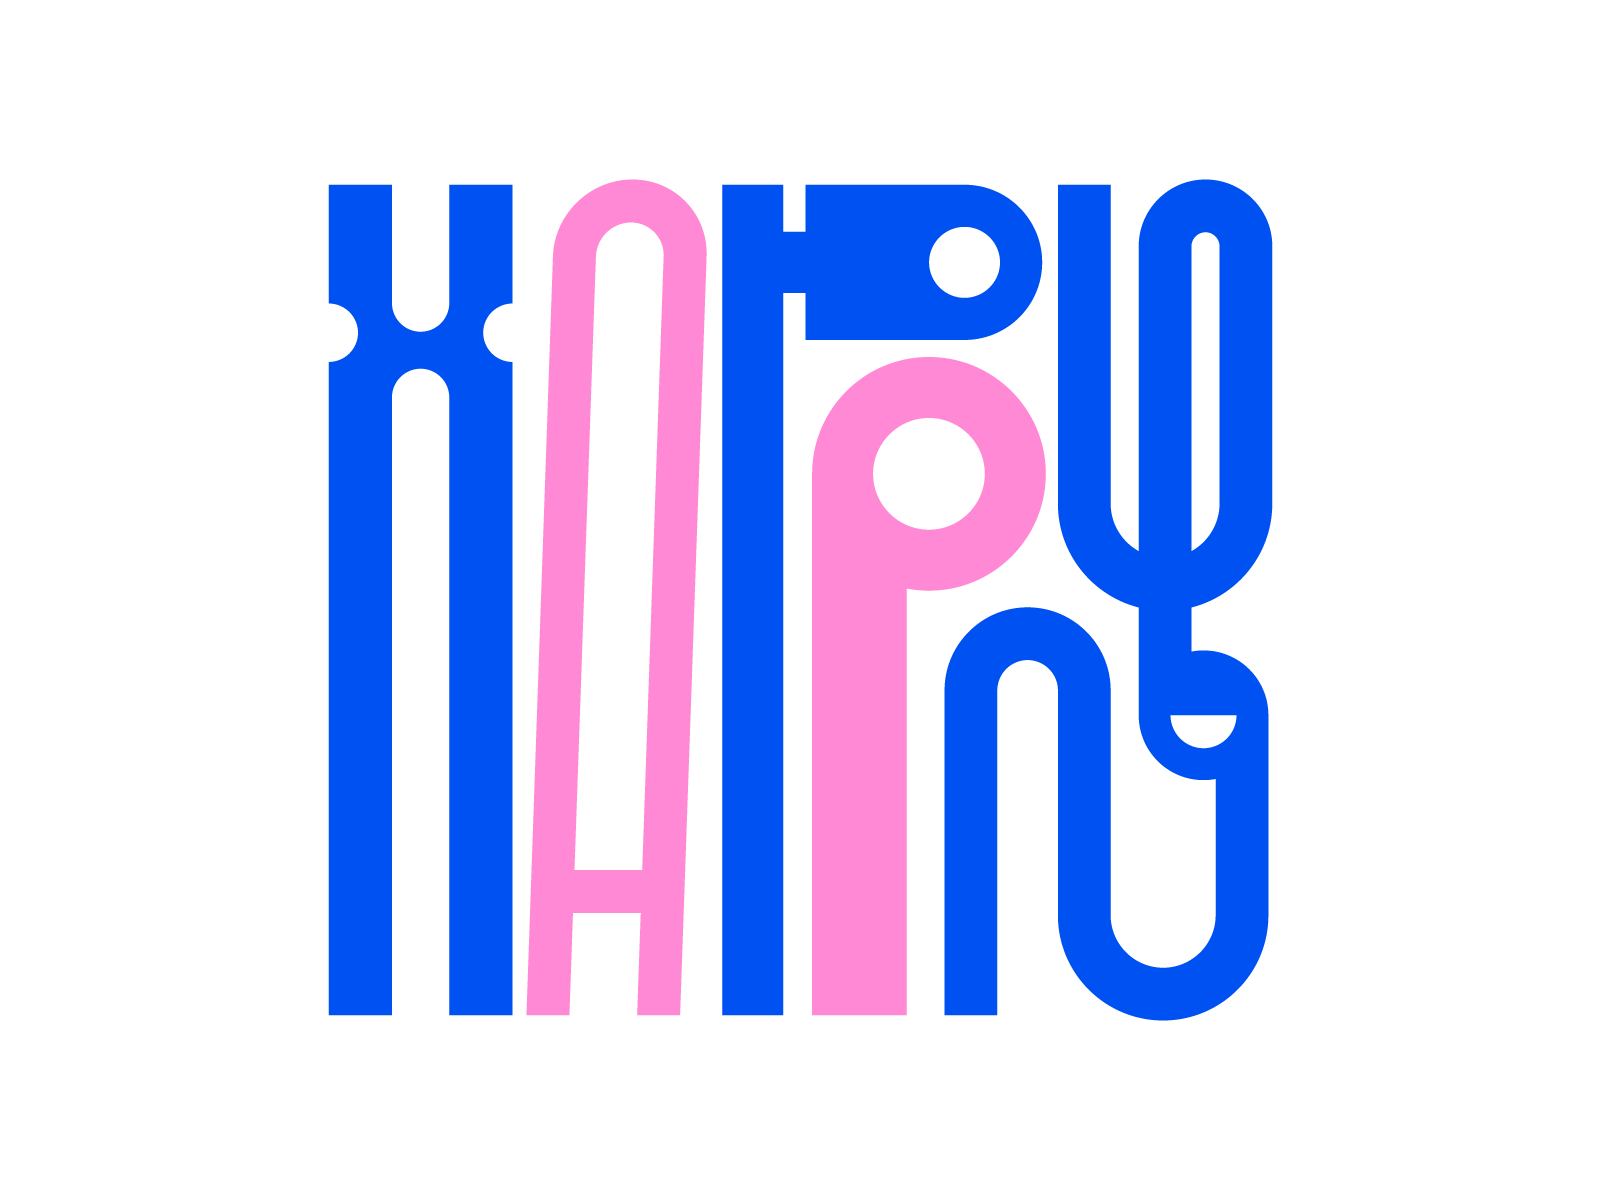 Happy design faelpt graphic design happy illustration instagram lettering letters type typedesign typography